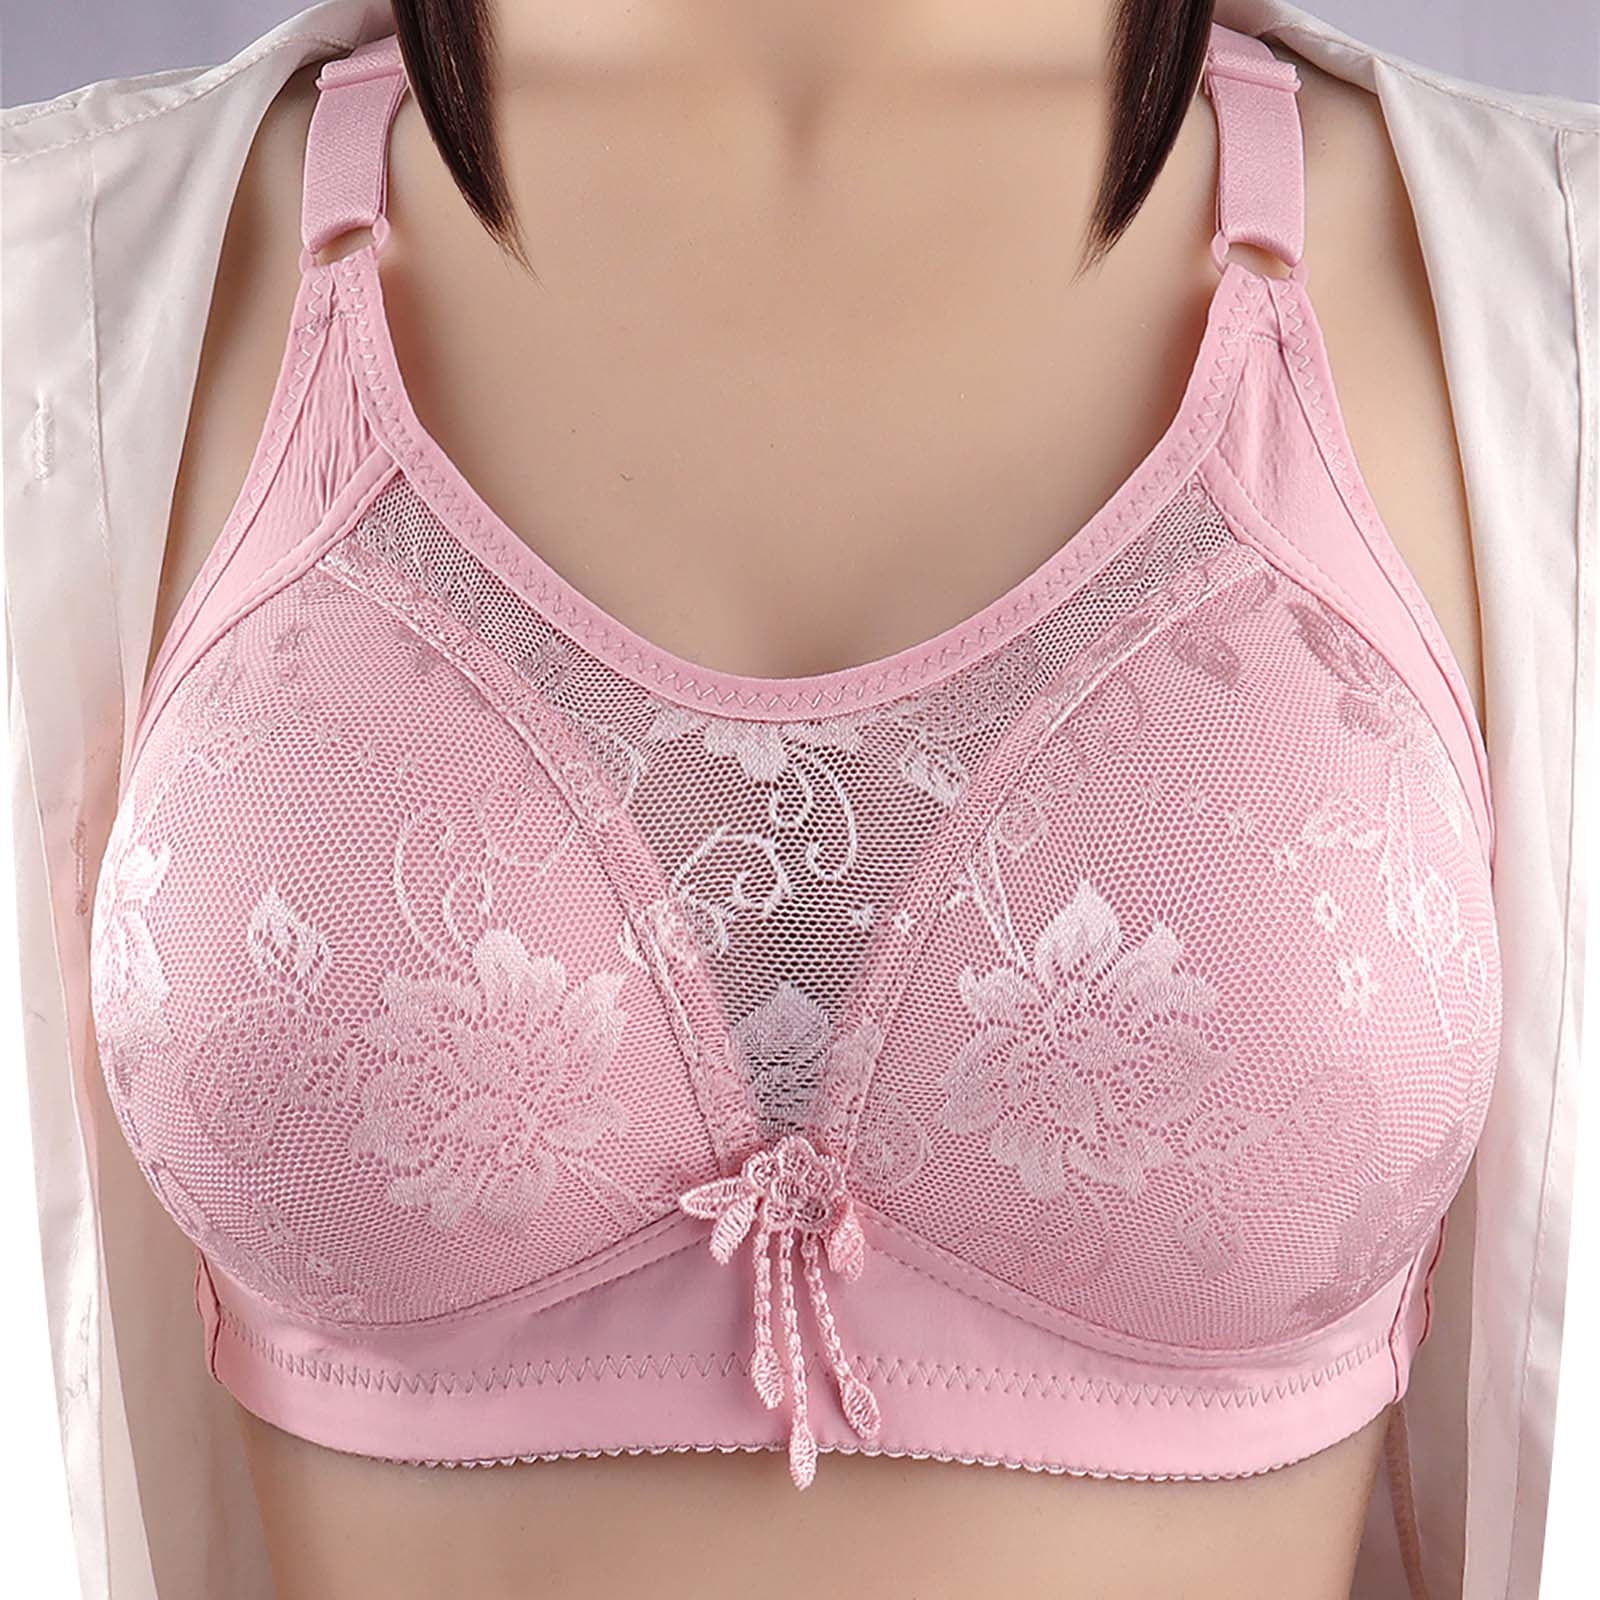 HSIA Blossom Lace Bra and Underwear Sets: Comfortable Plus Size Bra